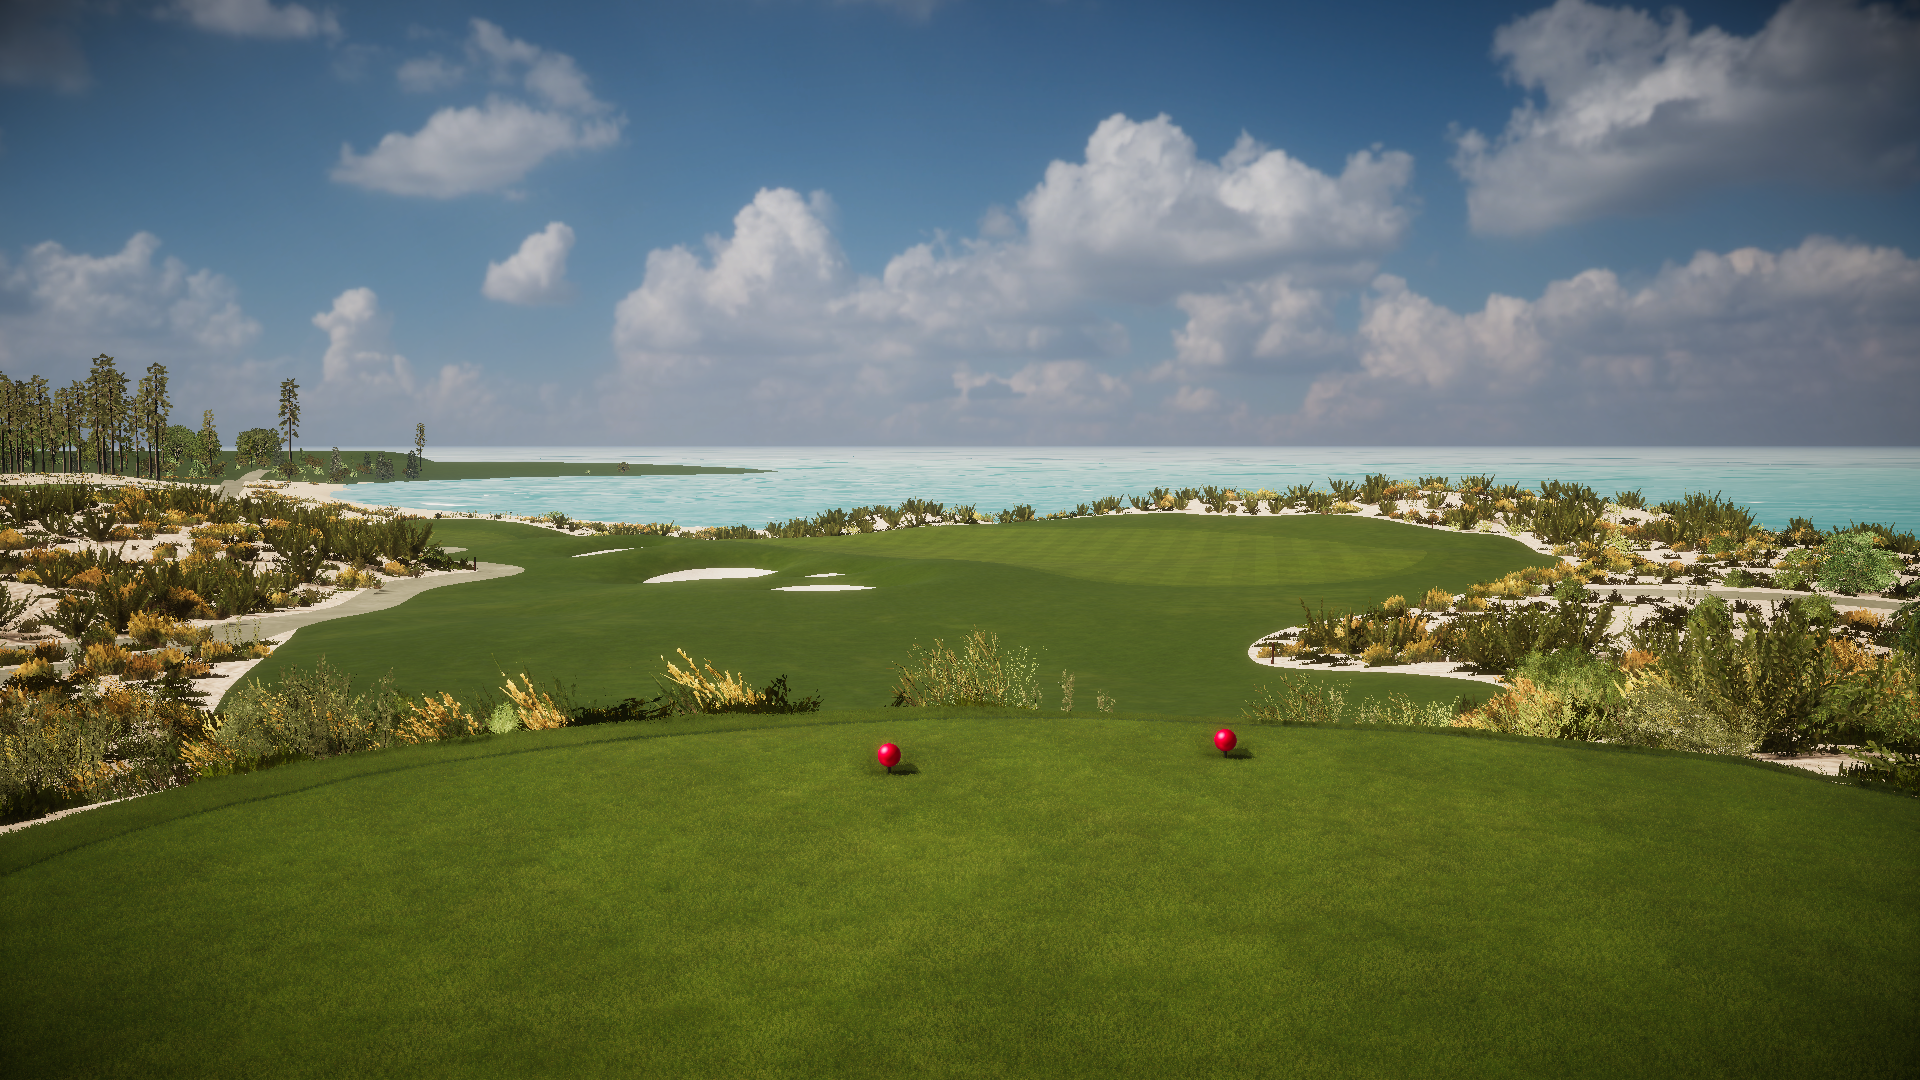 Pebble Beach Golf Links®, Spyglass Hill® Golf Course & The Links at Spanish Bay™ Bundle